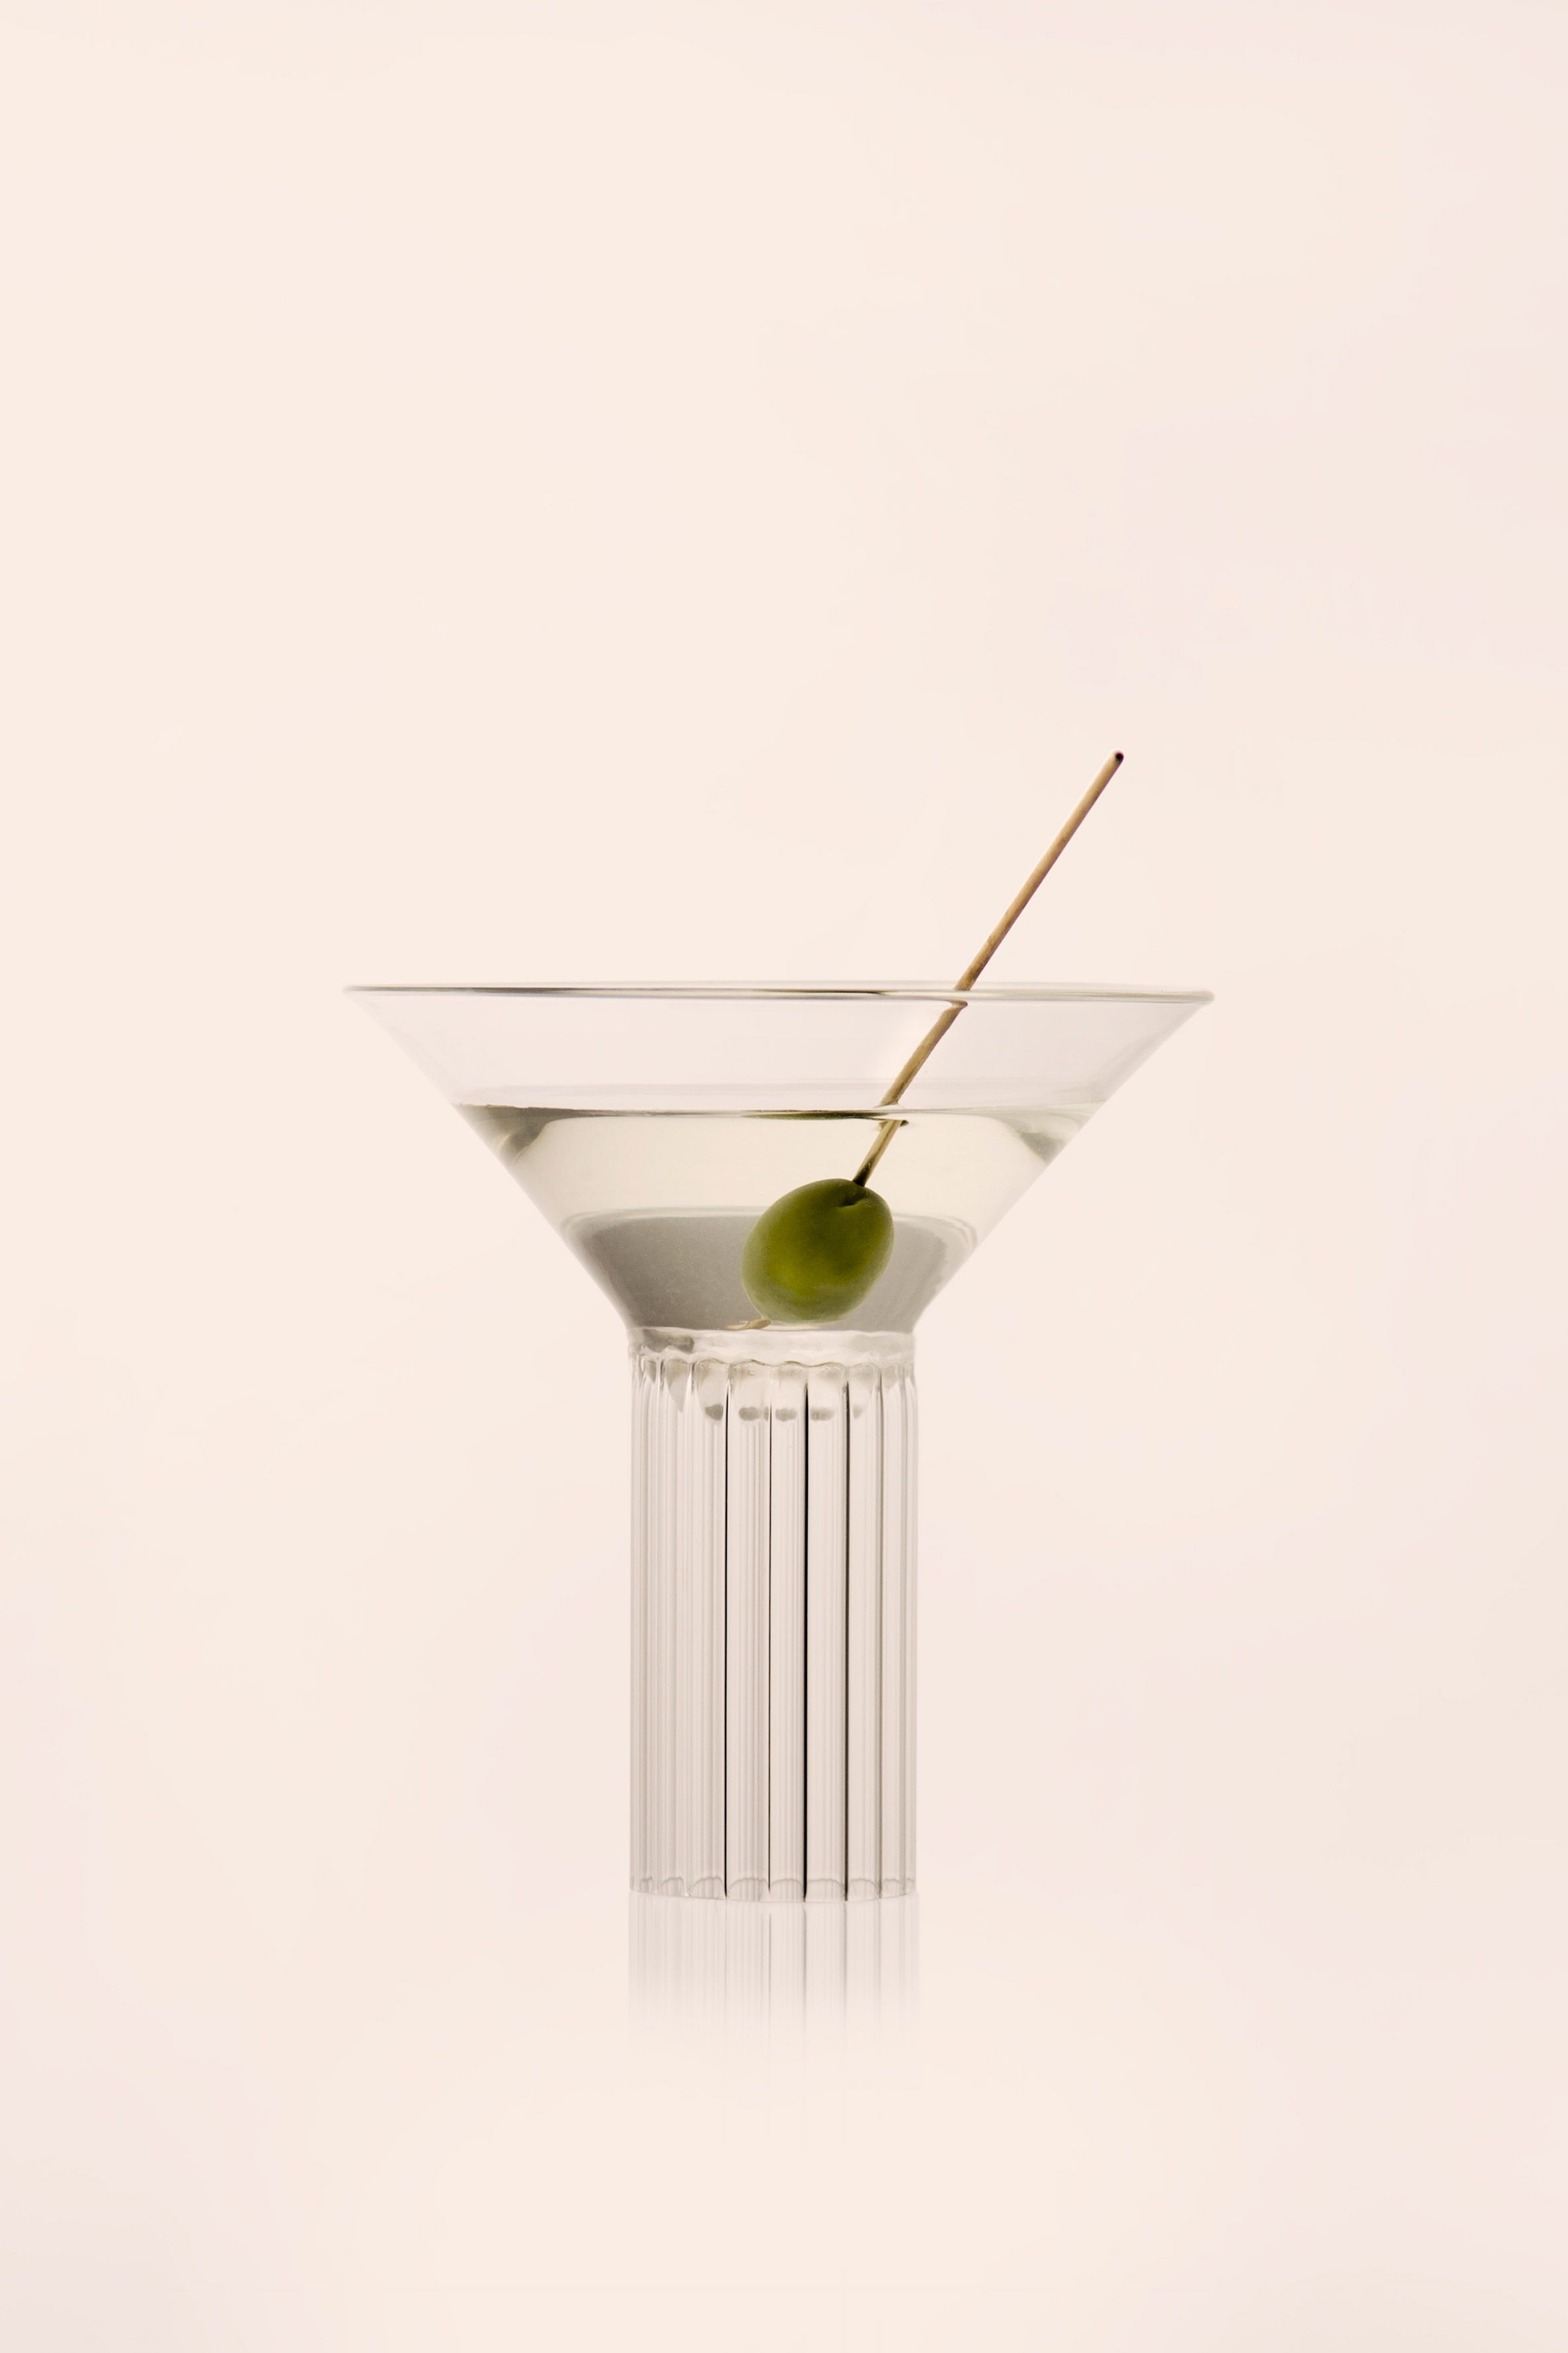 Agustina Bottoni creates cocktail glasses based on Milanese architecture